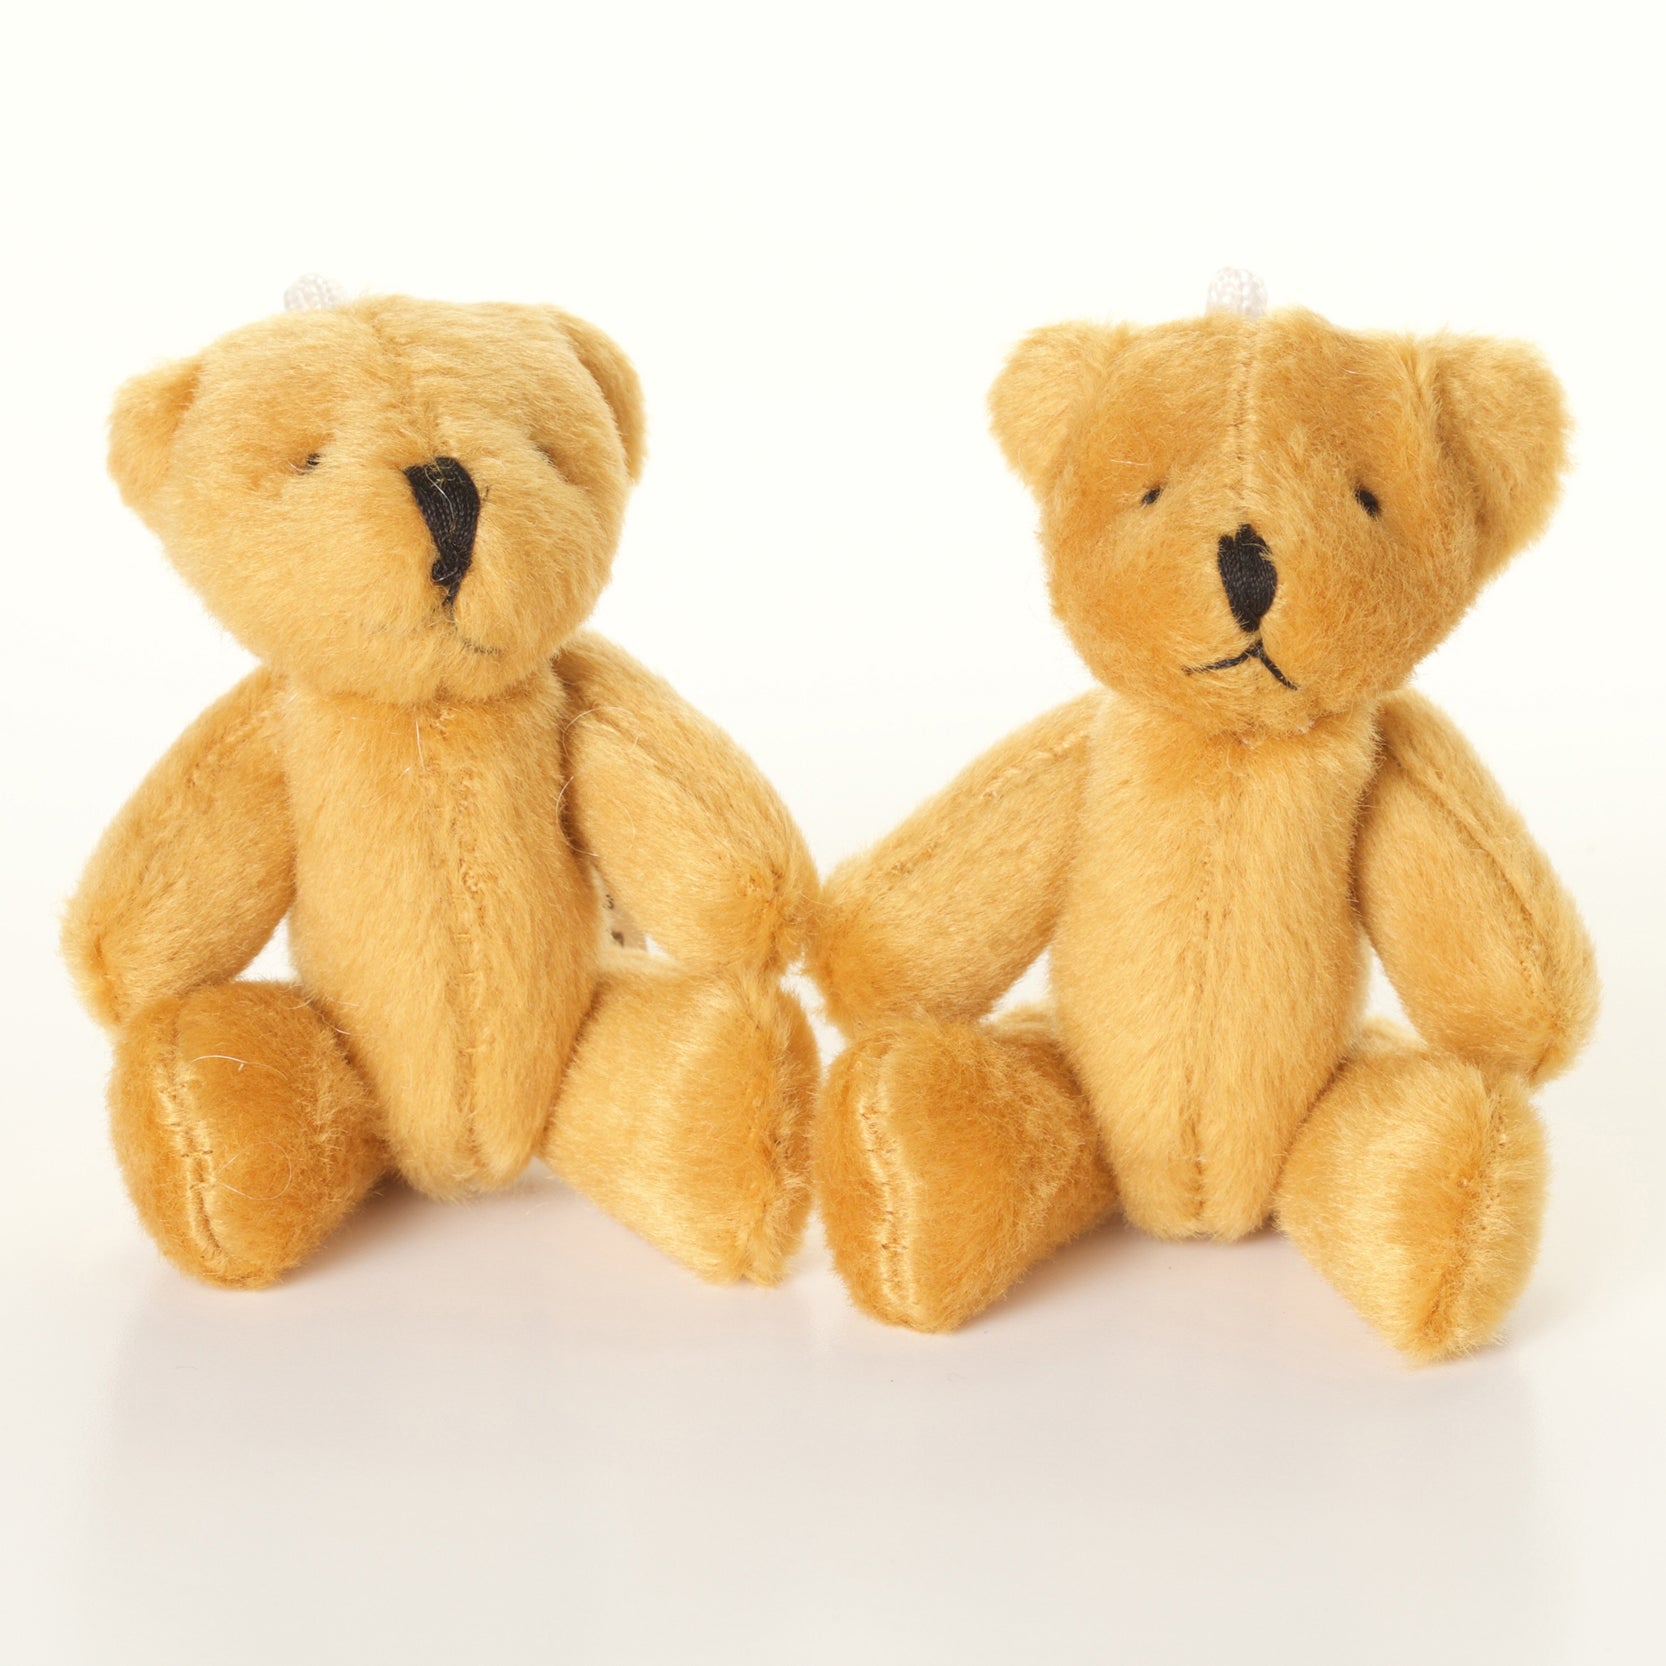 Small BROWN Teddy Bears X 35 - Cute Soft Adorable